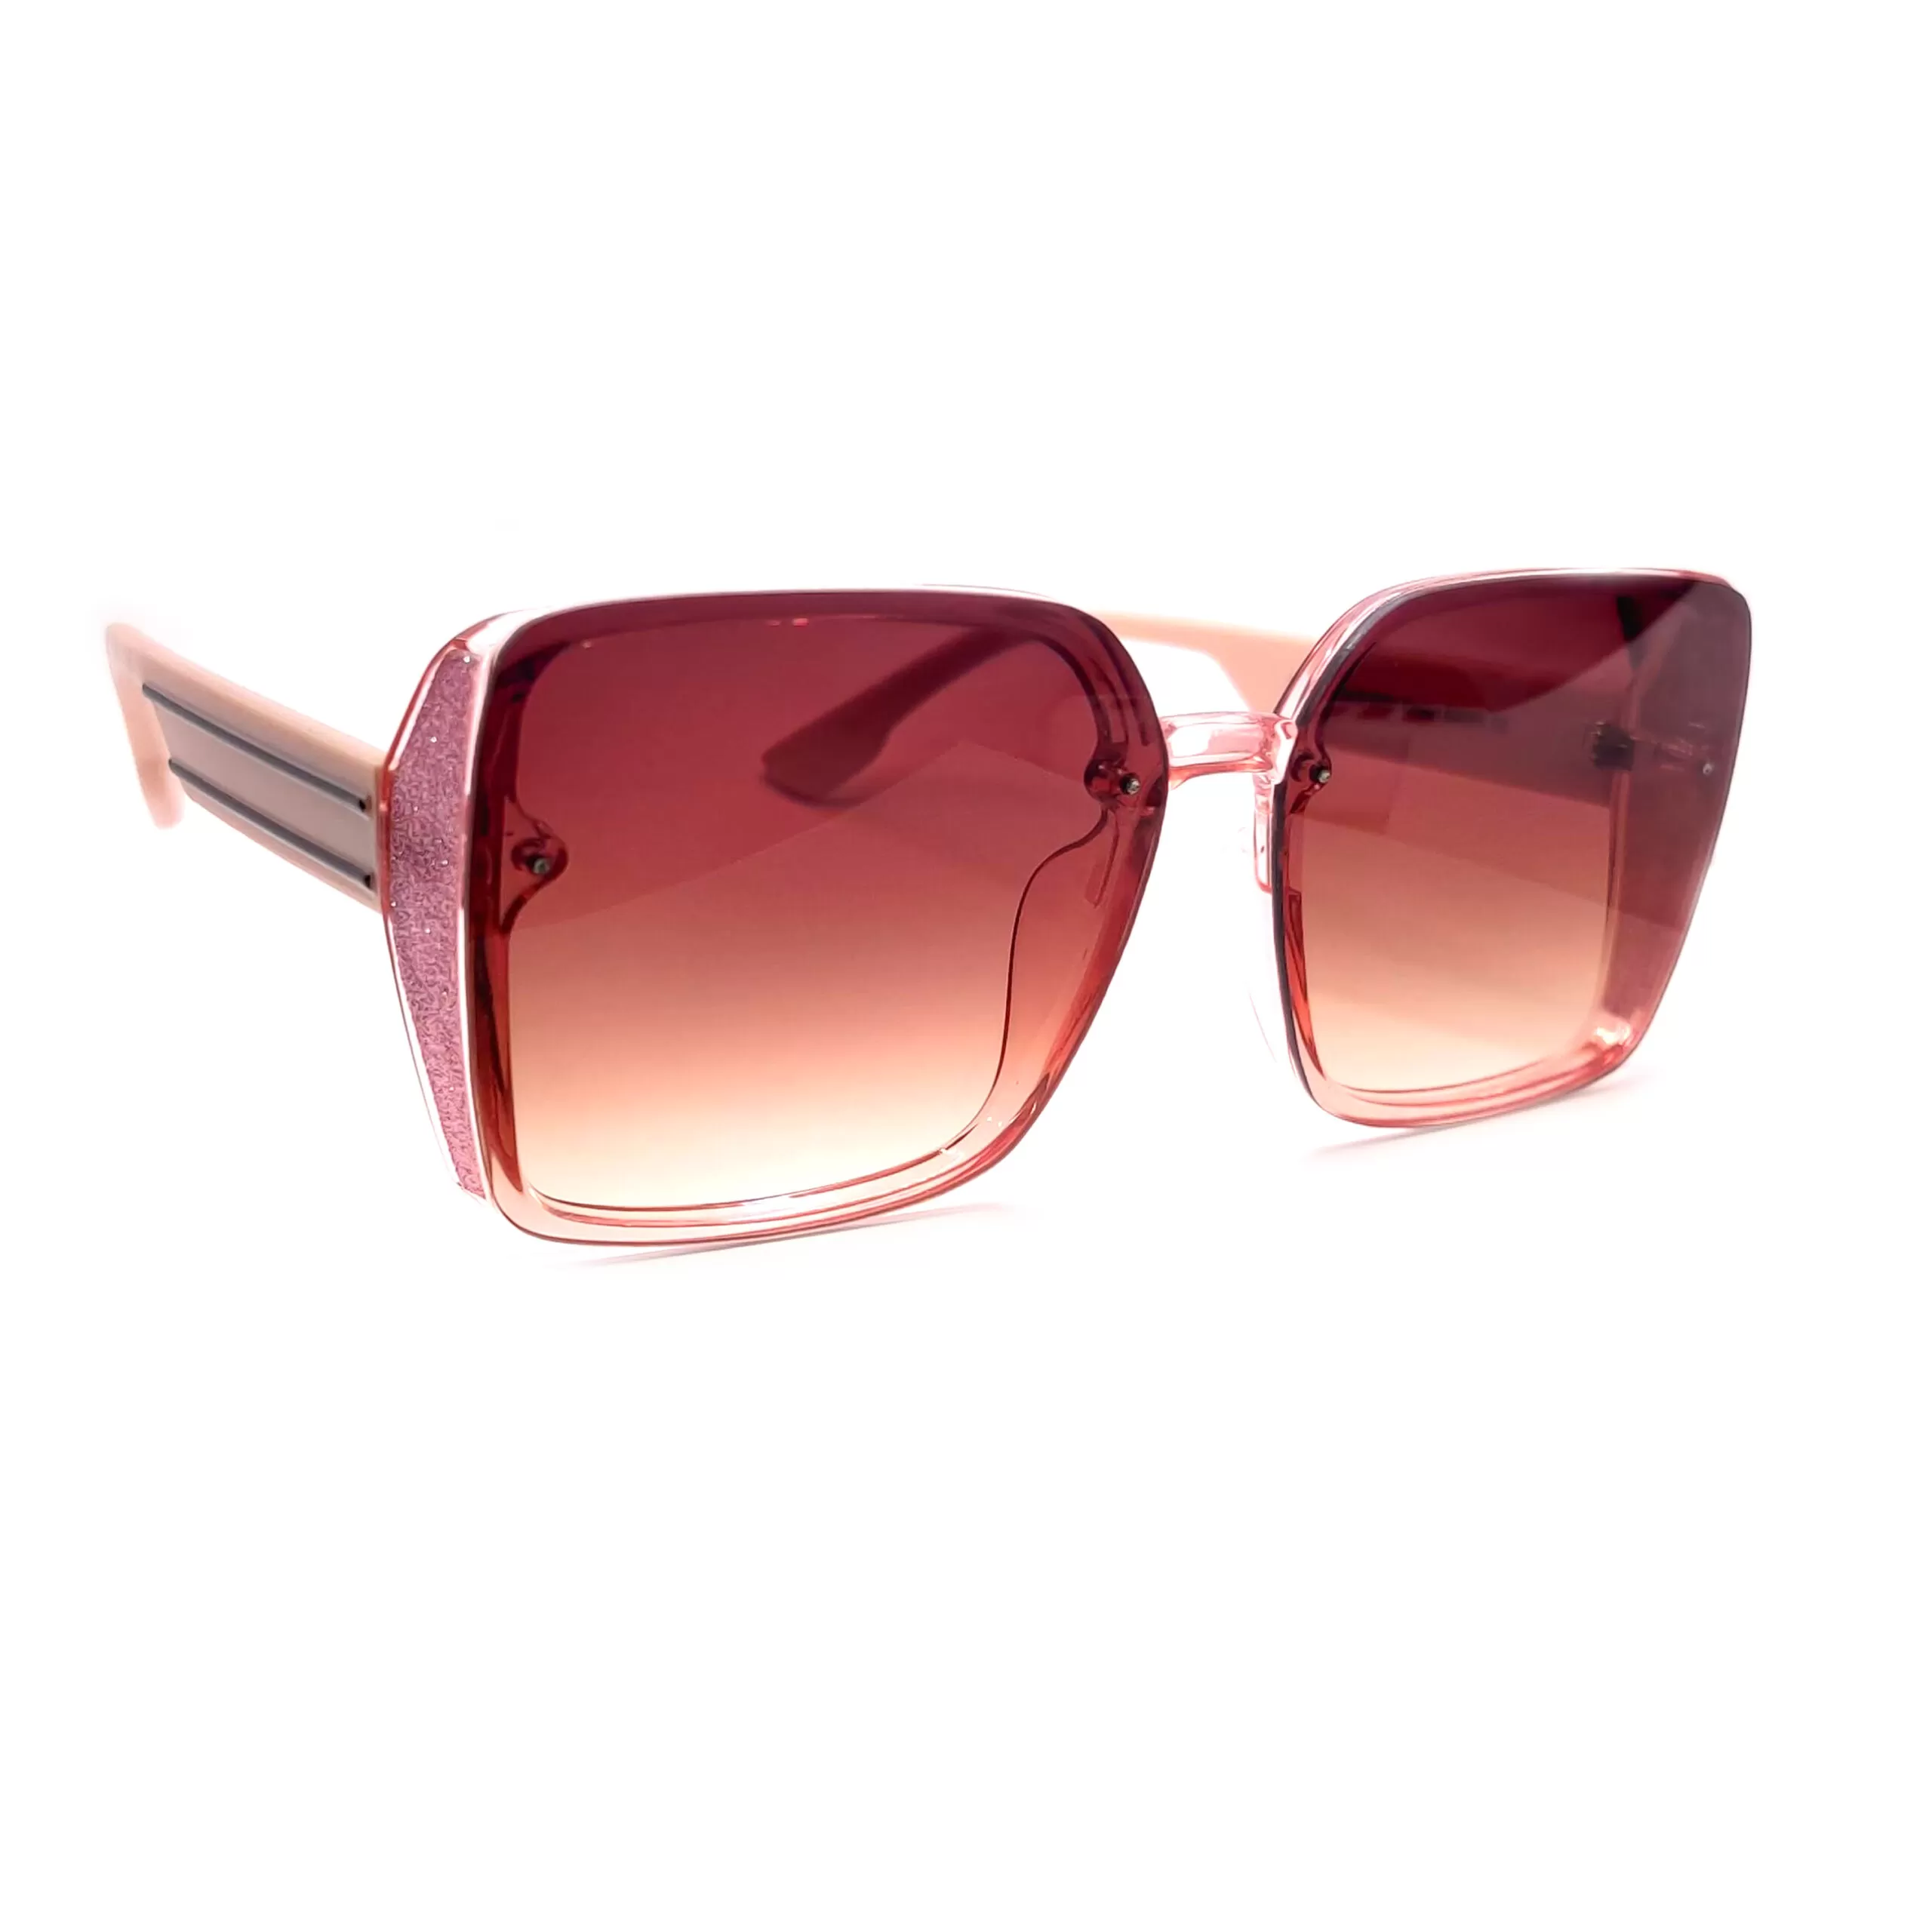 Buy sunglasses online at chashmah.com